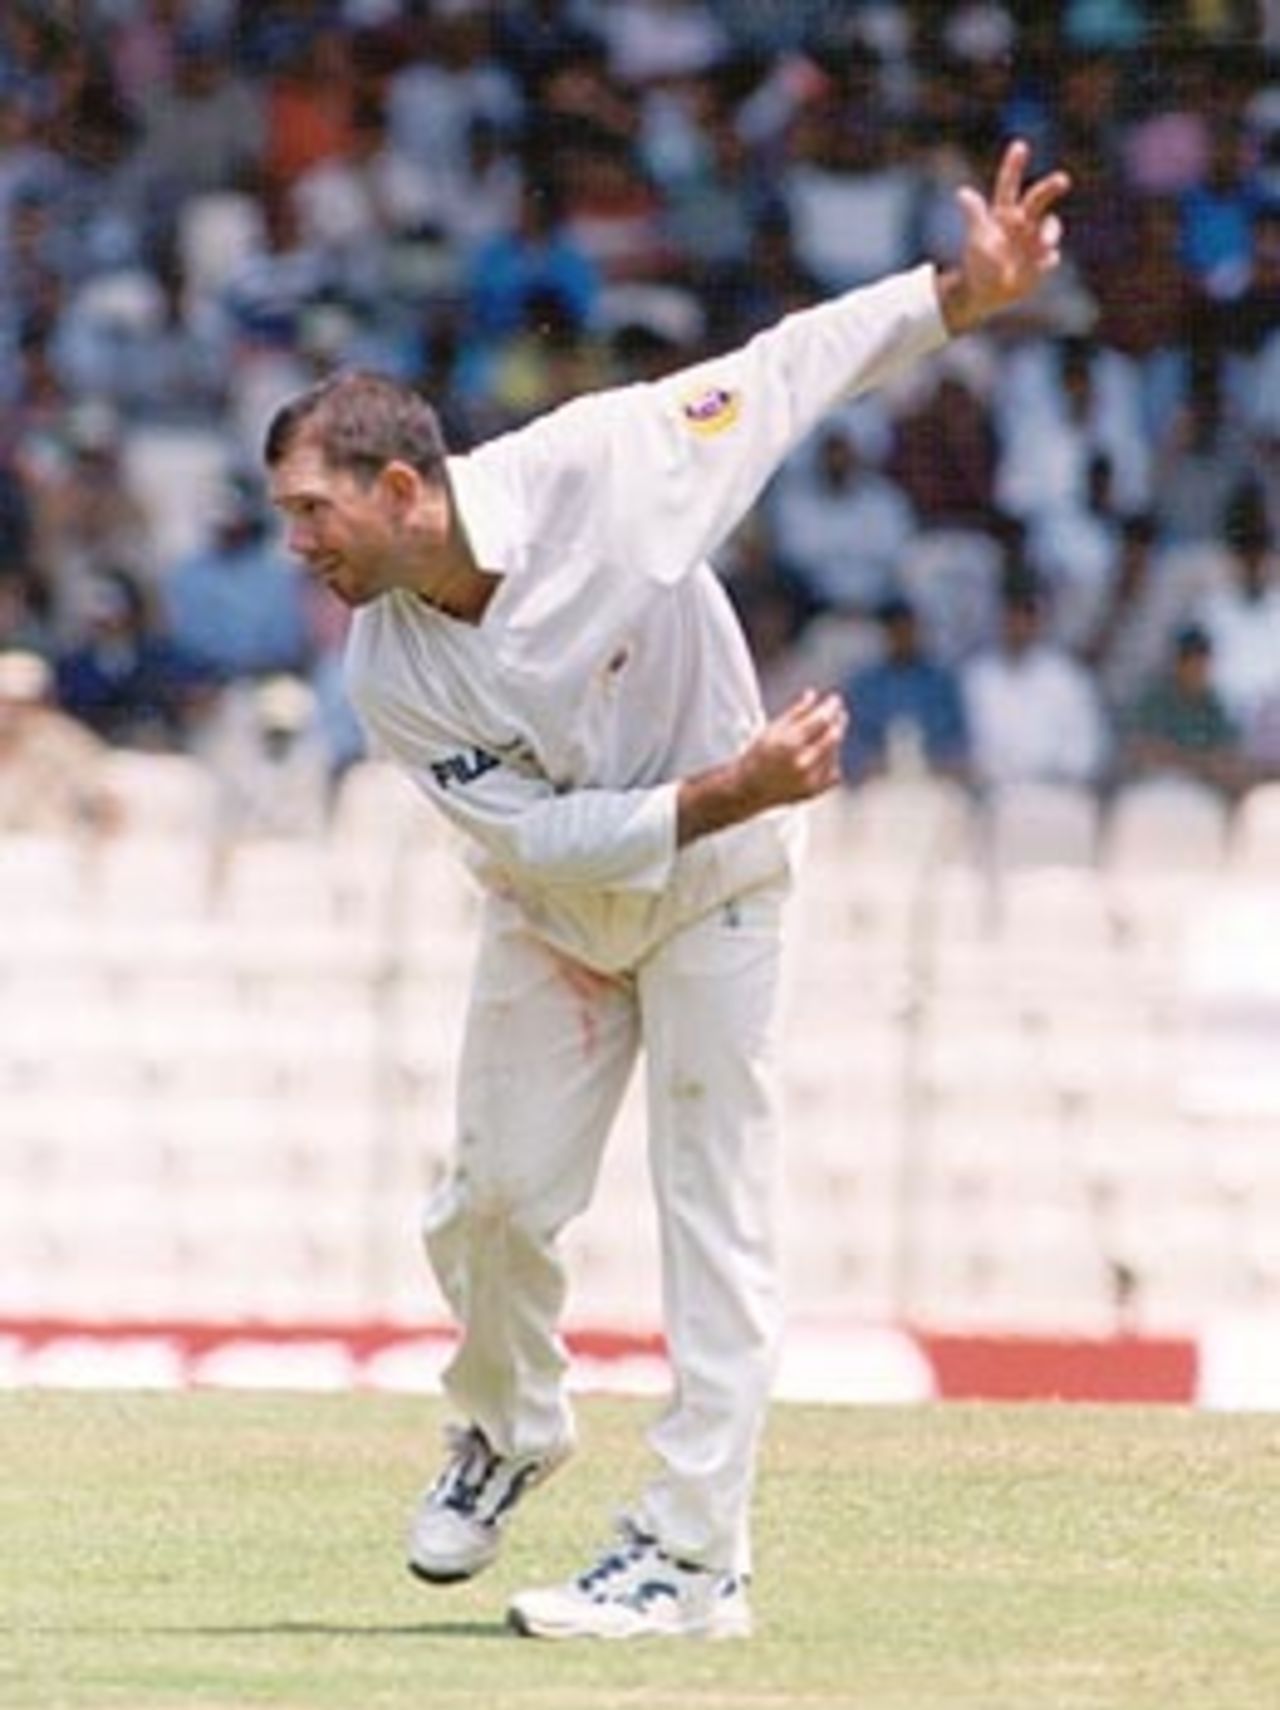 20 Mar 2001: Australia in India, India v Australia 3rd Test, MA Chidambaram Stadium, Chepauk, Chennai, 18-22 Mar 2001 (Day 3)